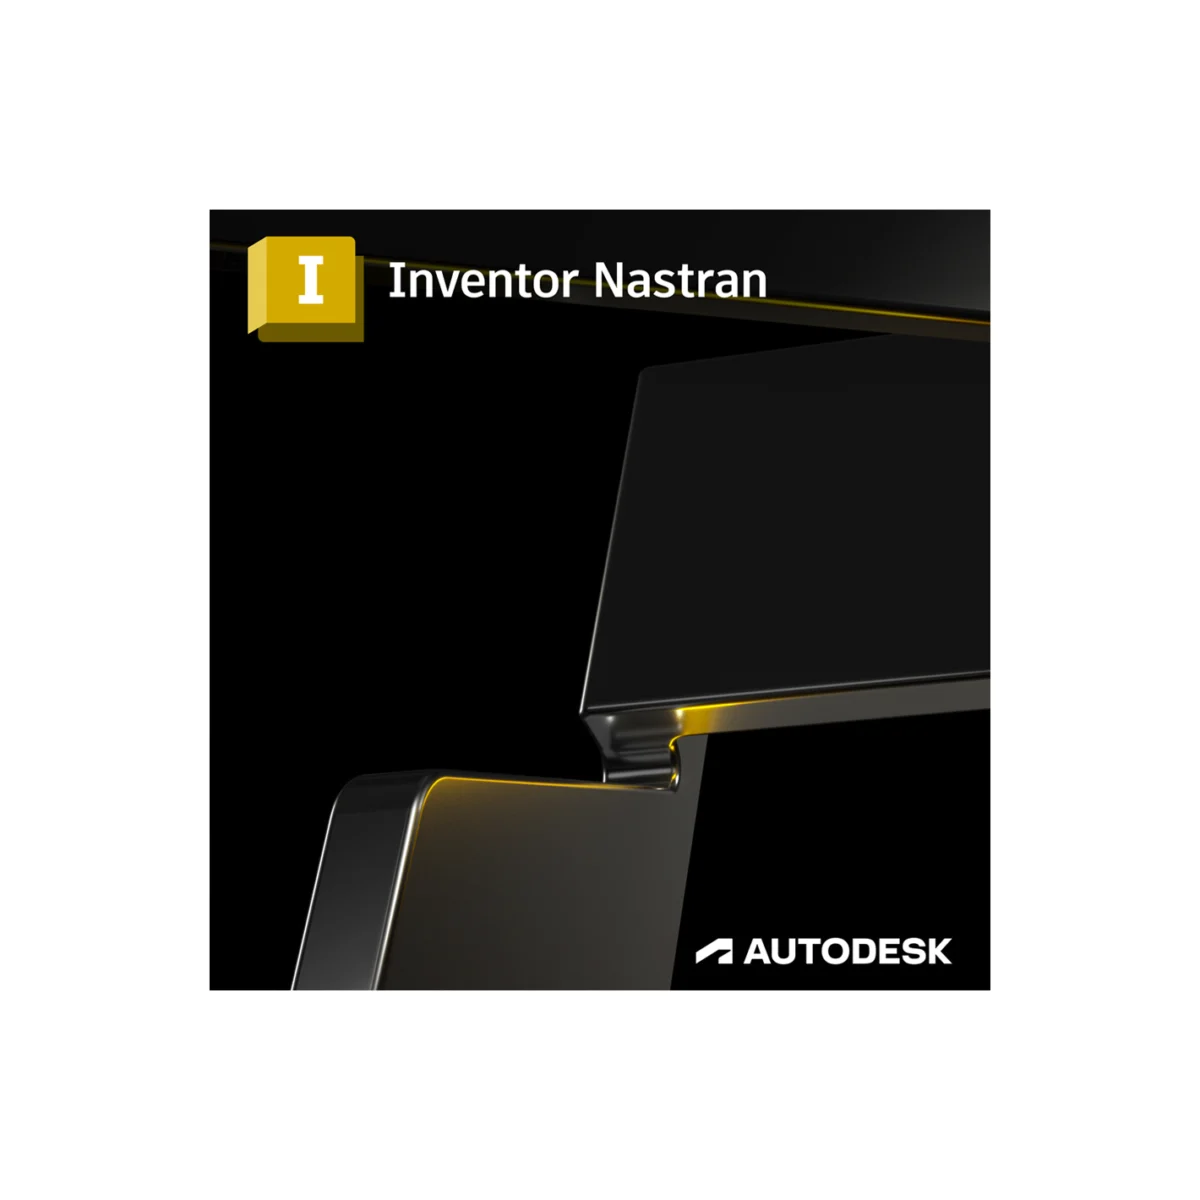 Inventor Nastran